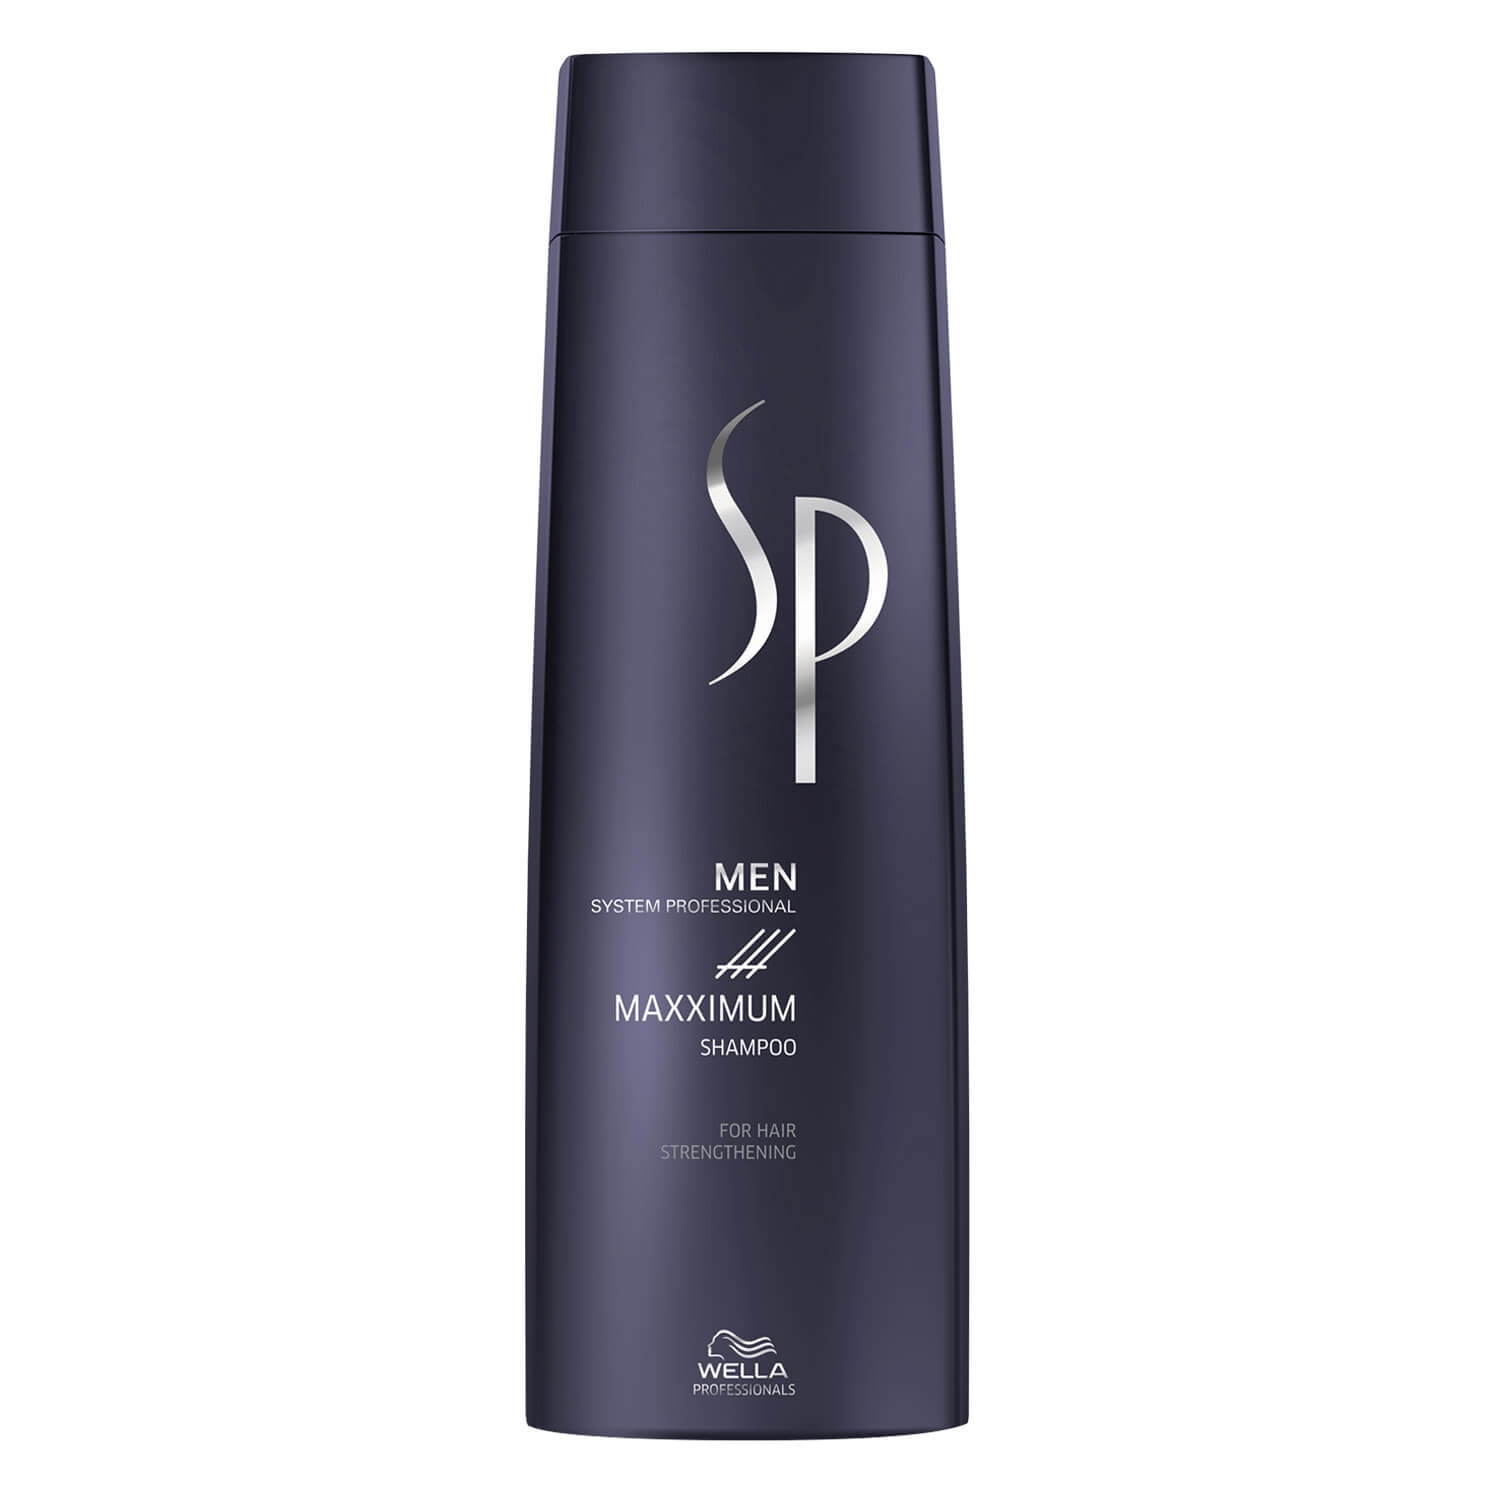 Product image from SP Men - Maxximum Shampoo